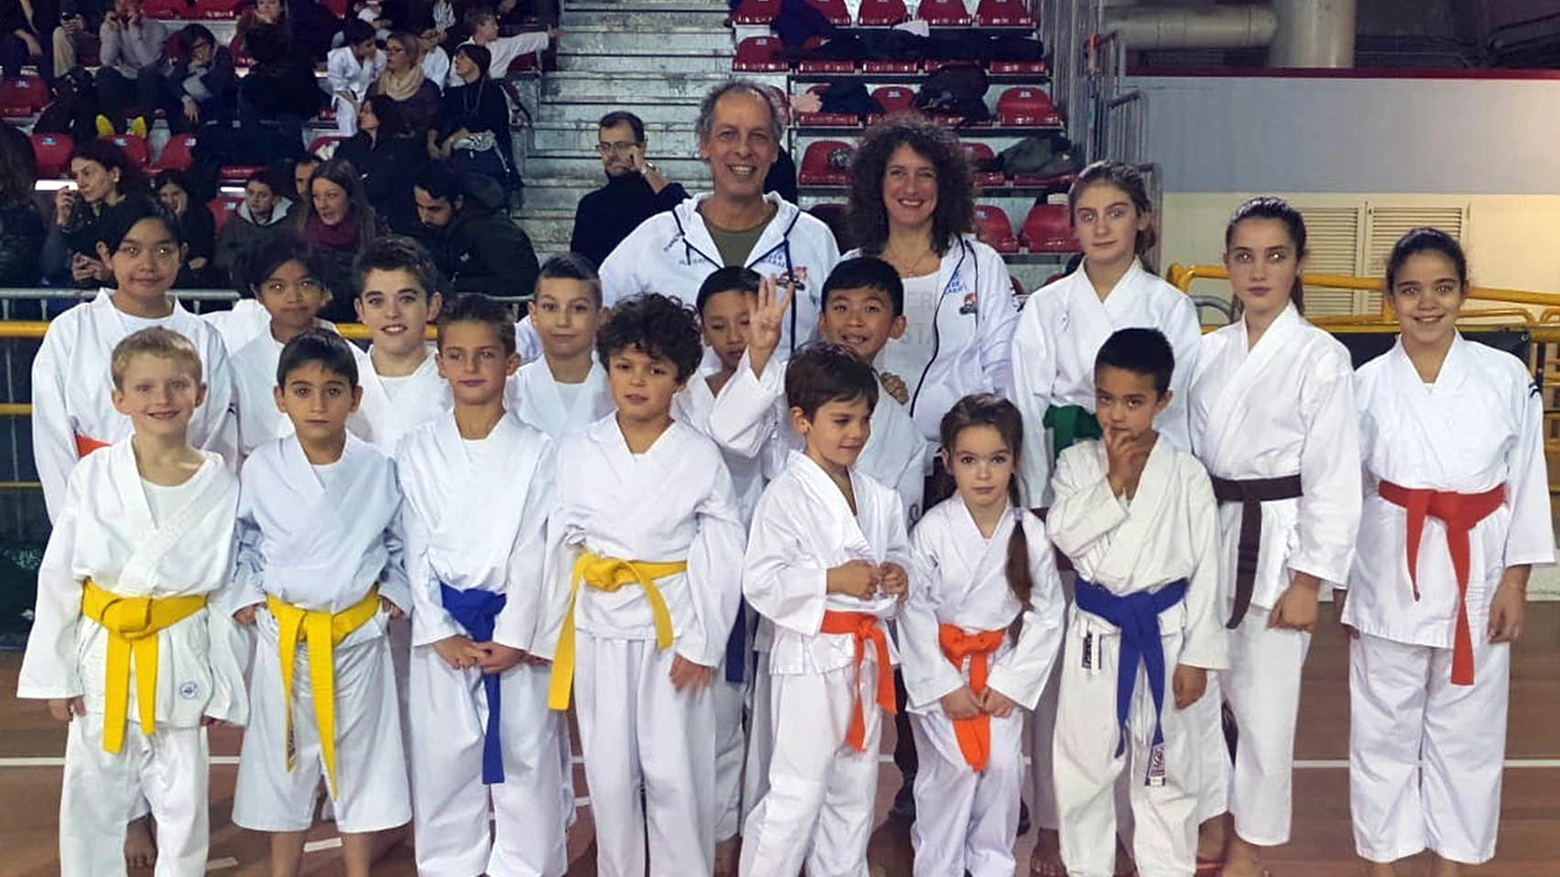 Arezzo Karate